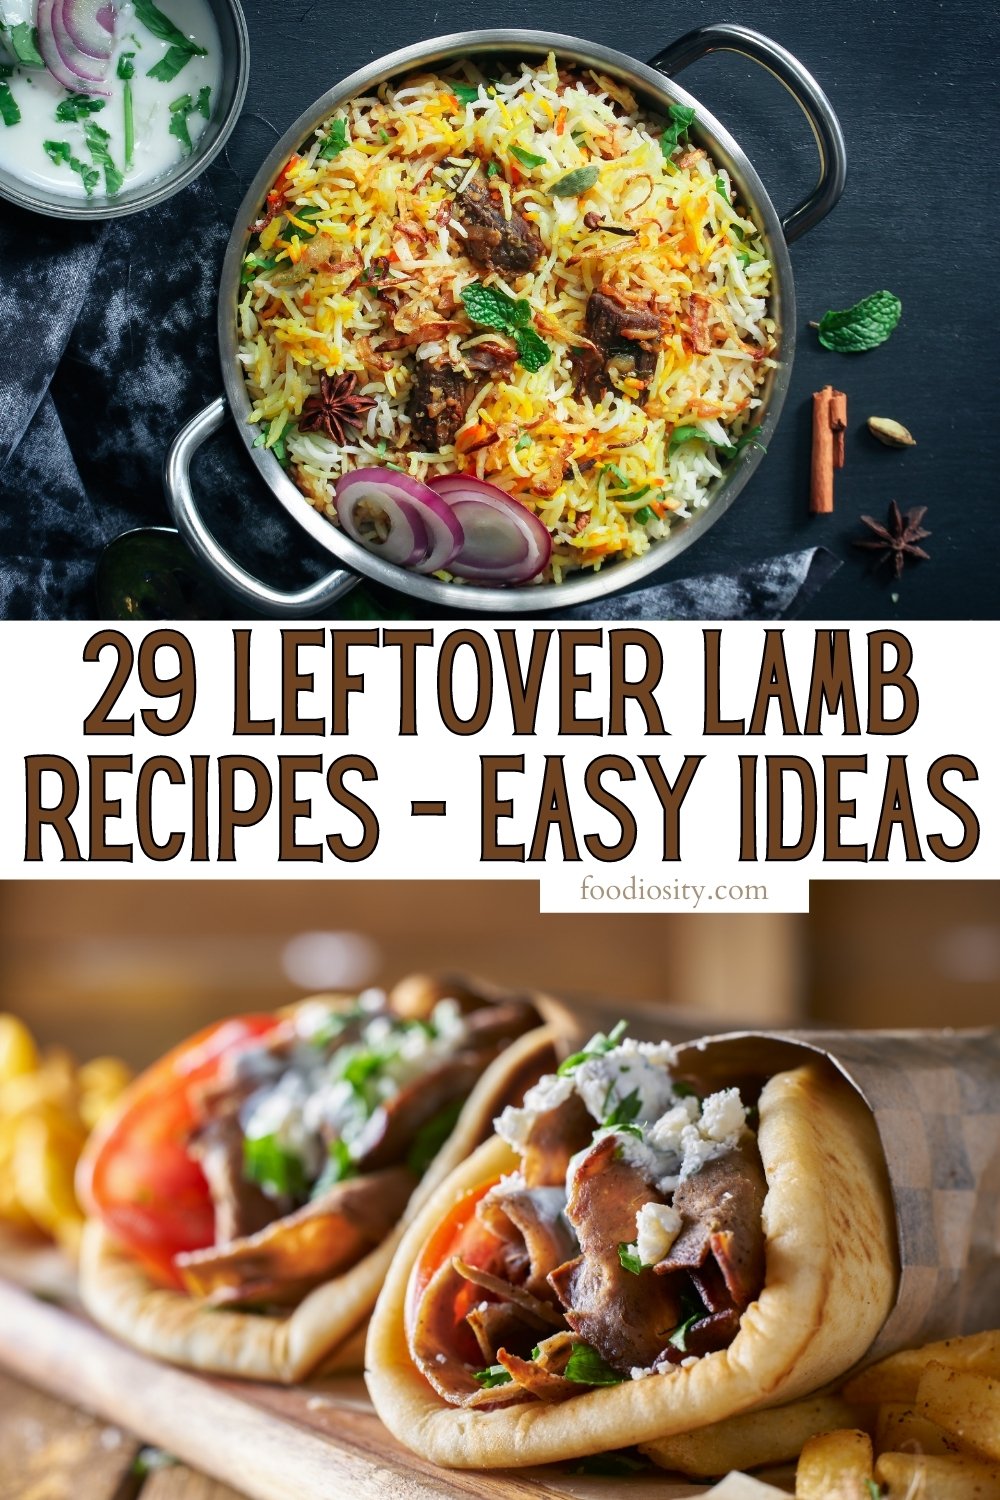 29 Leftover Lamb Recipes - Easy Dinner Ideas - Foodiosity